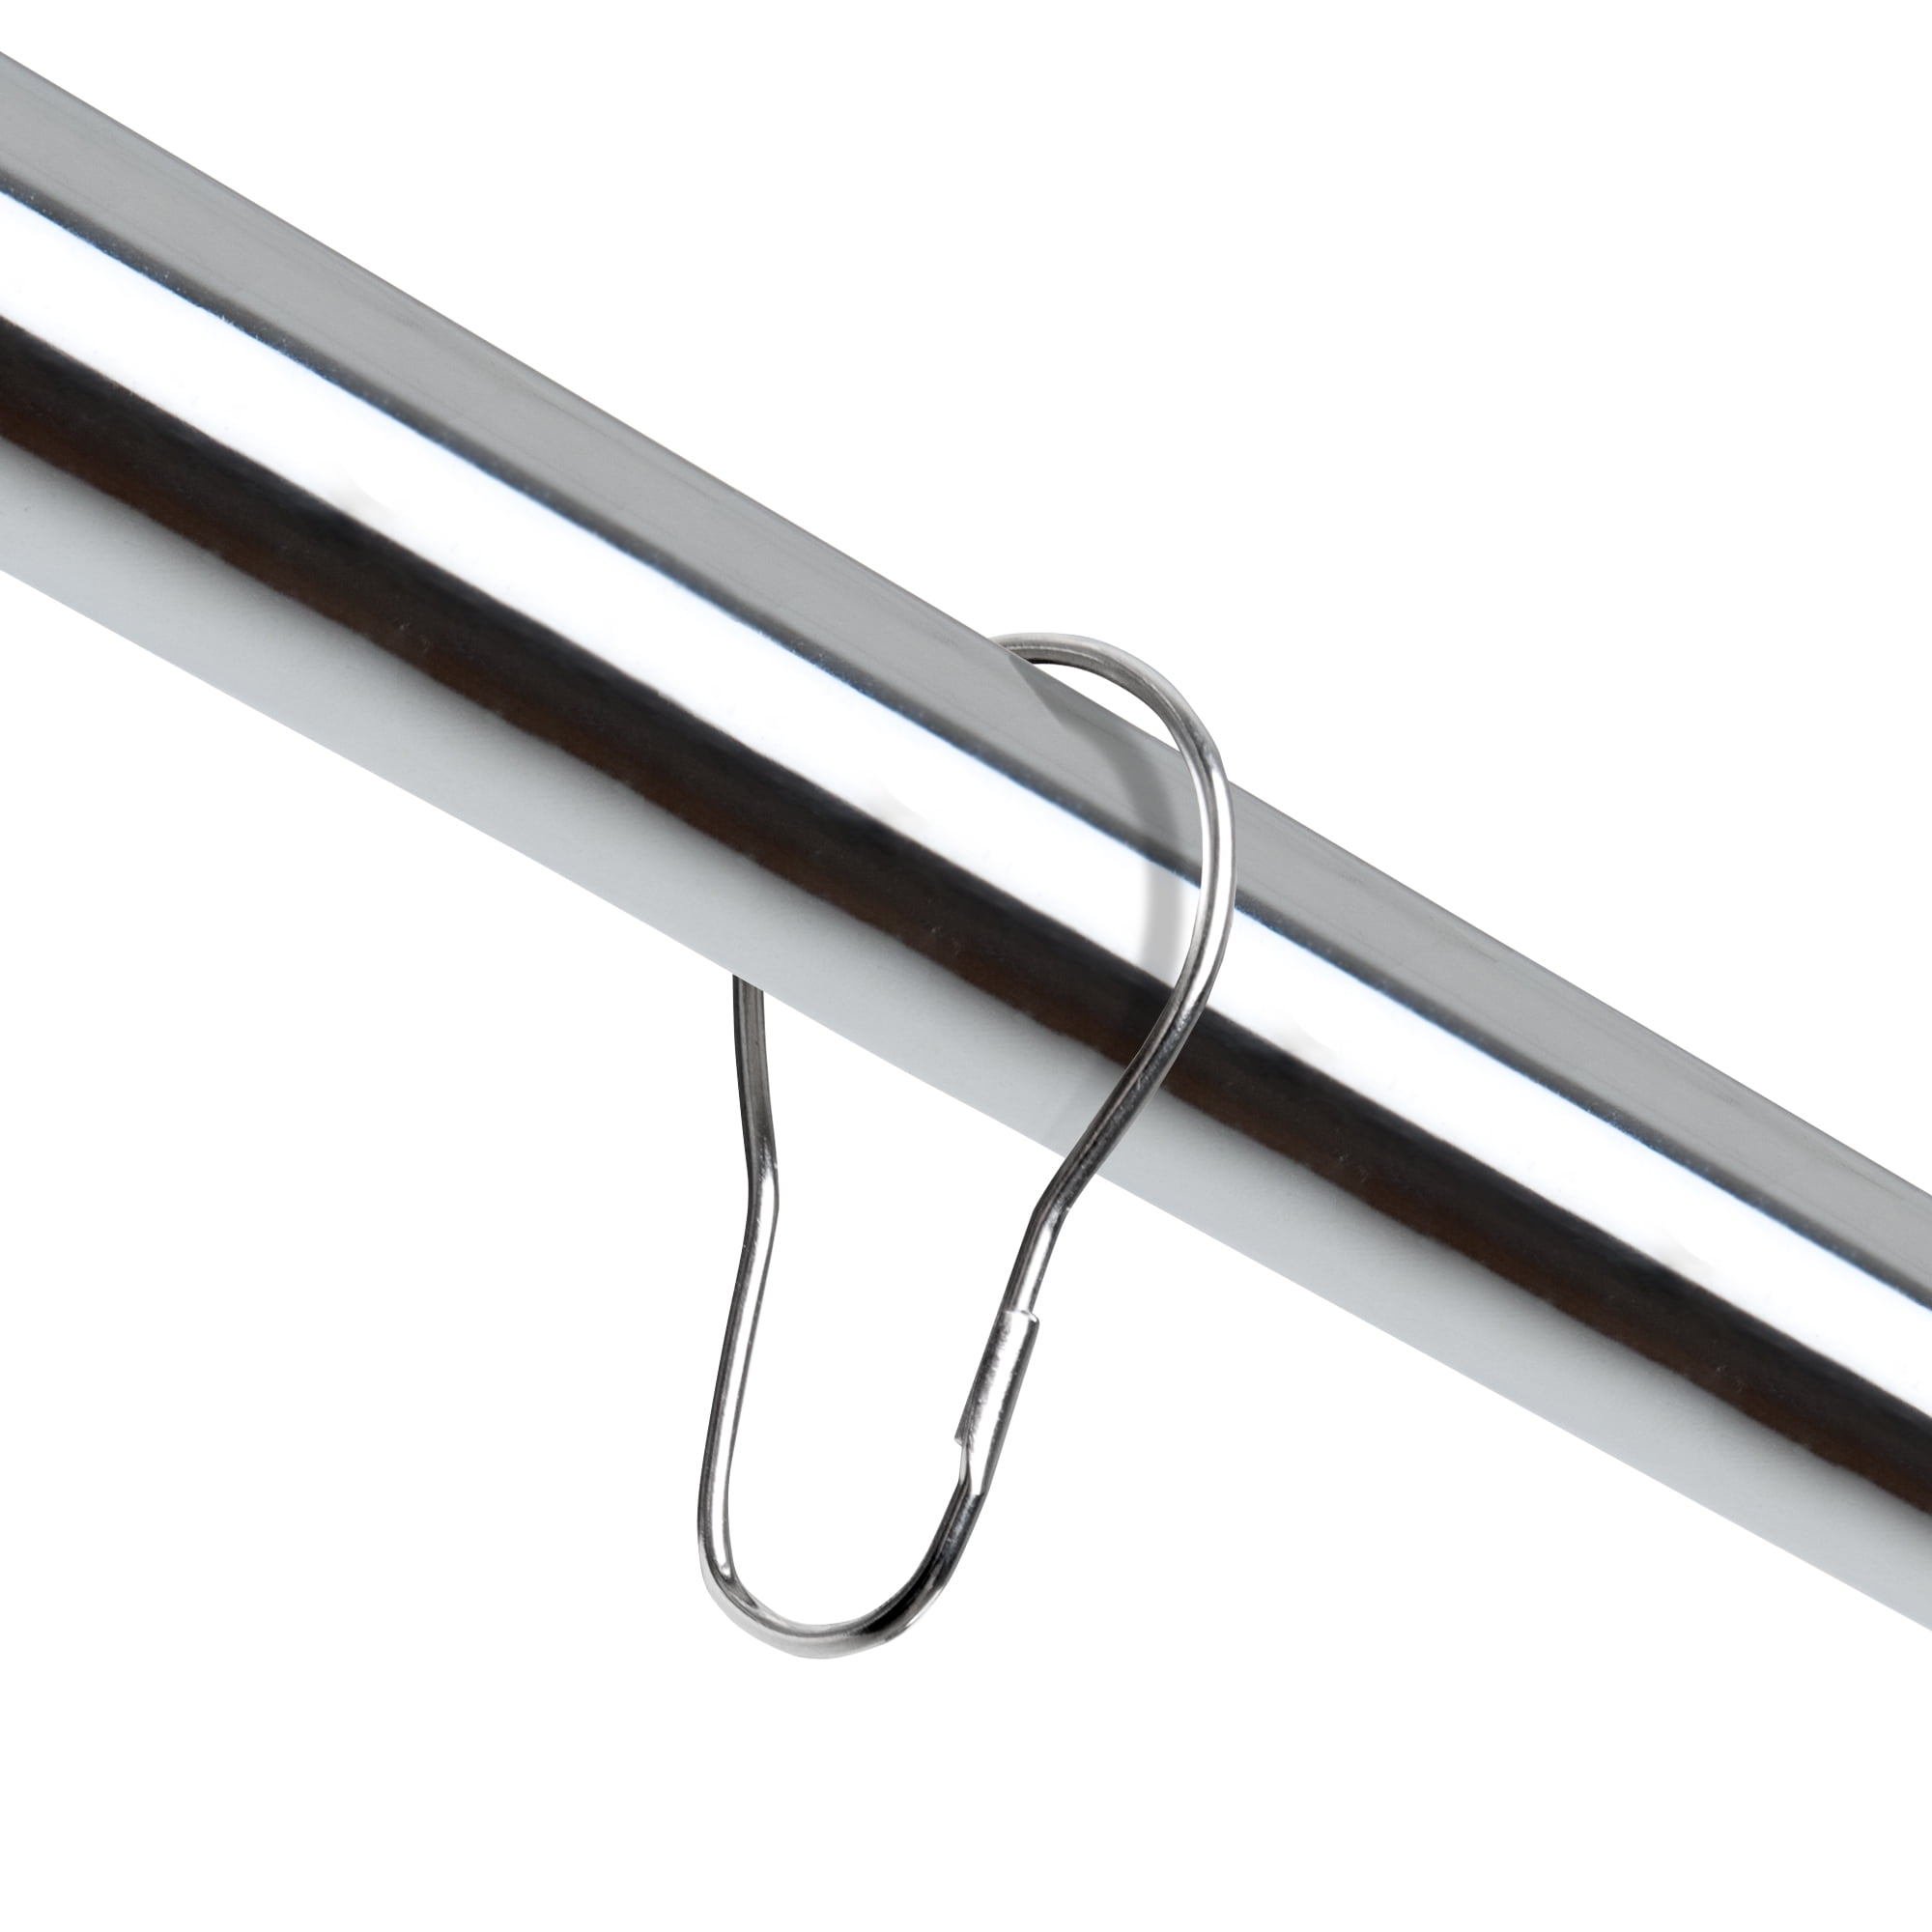 Double Hooks Set of 12 DOTZ Chrome Shower Curtain Rings Durable Stainless Steel